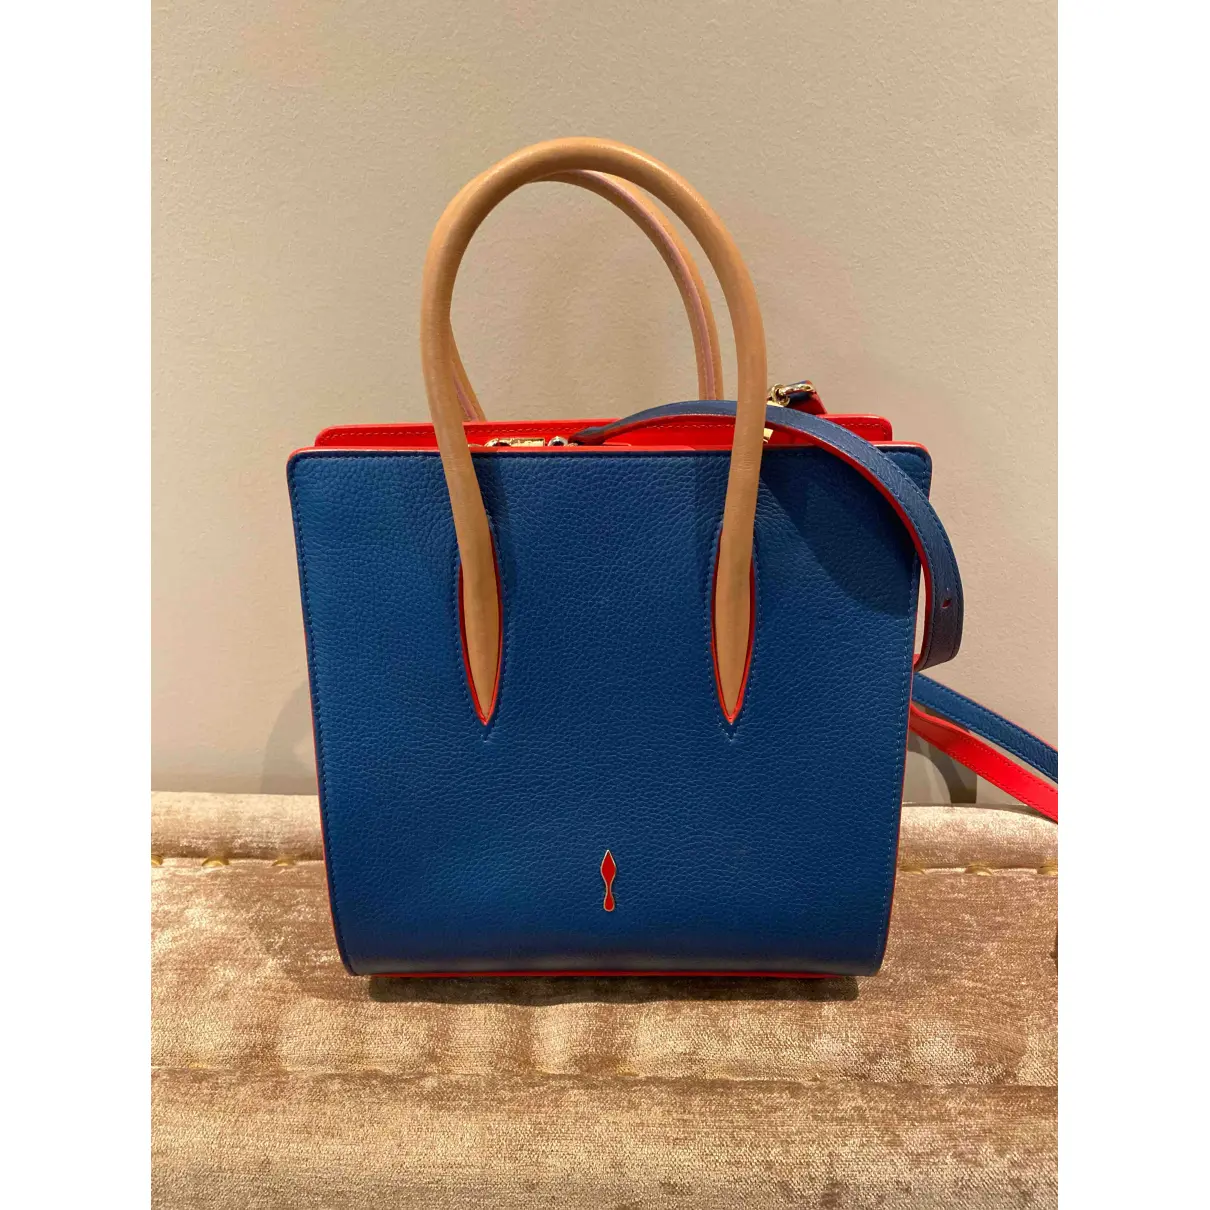 Buy Christian Louboutin Pony-style calfskin handbag online